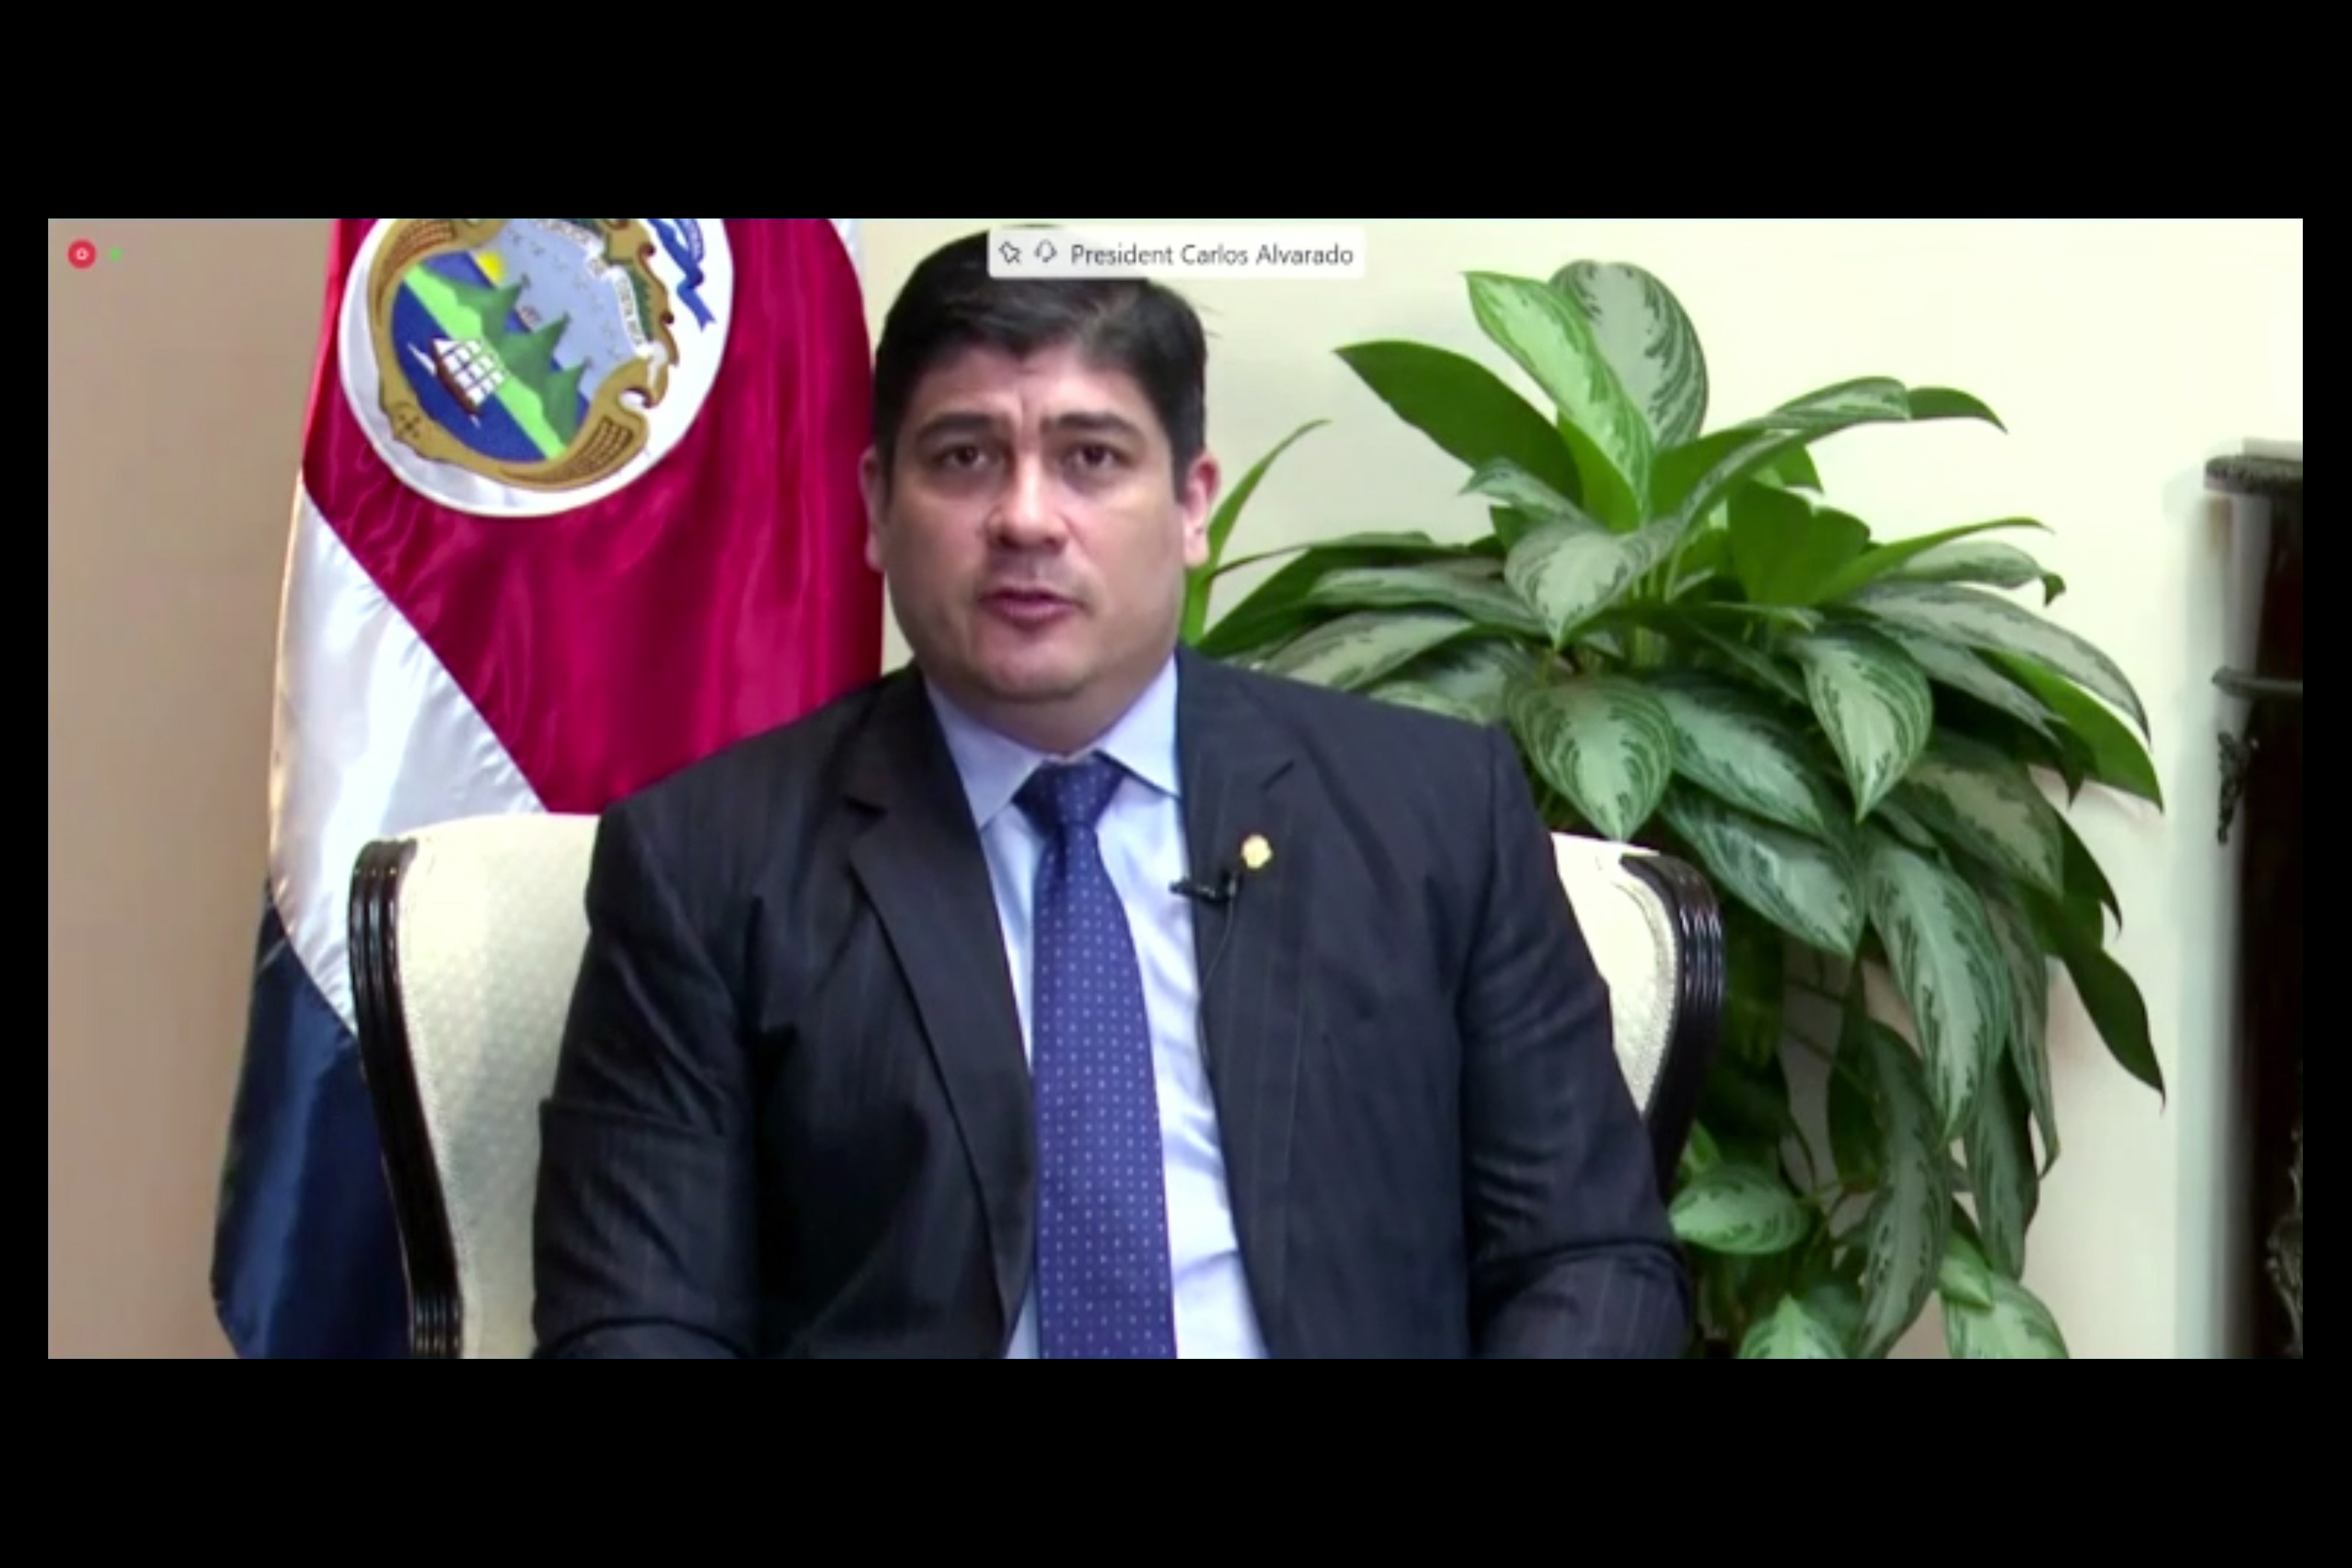 Carlos Alvarado, President of Costa Rica